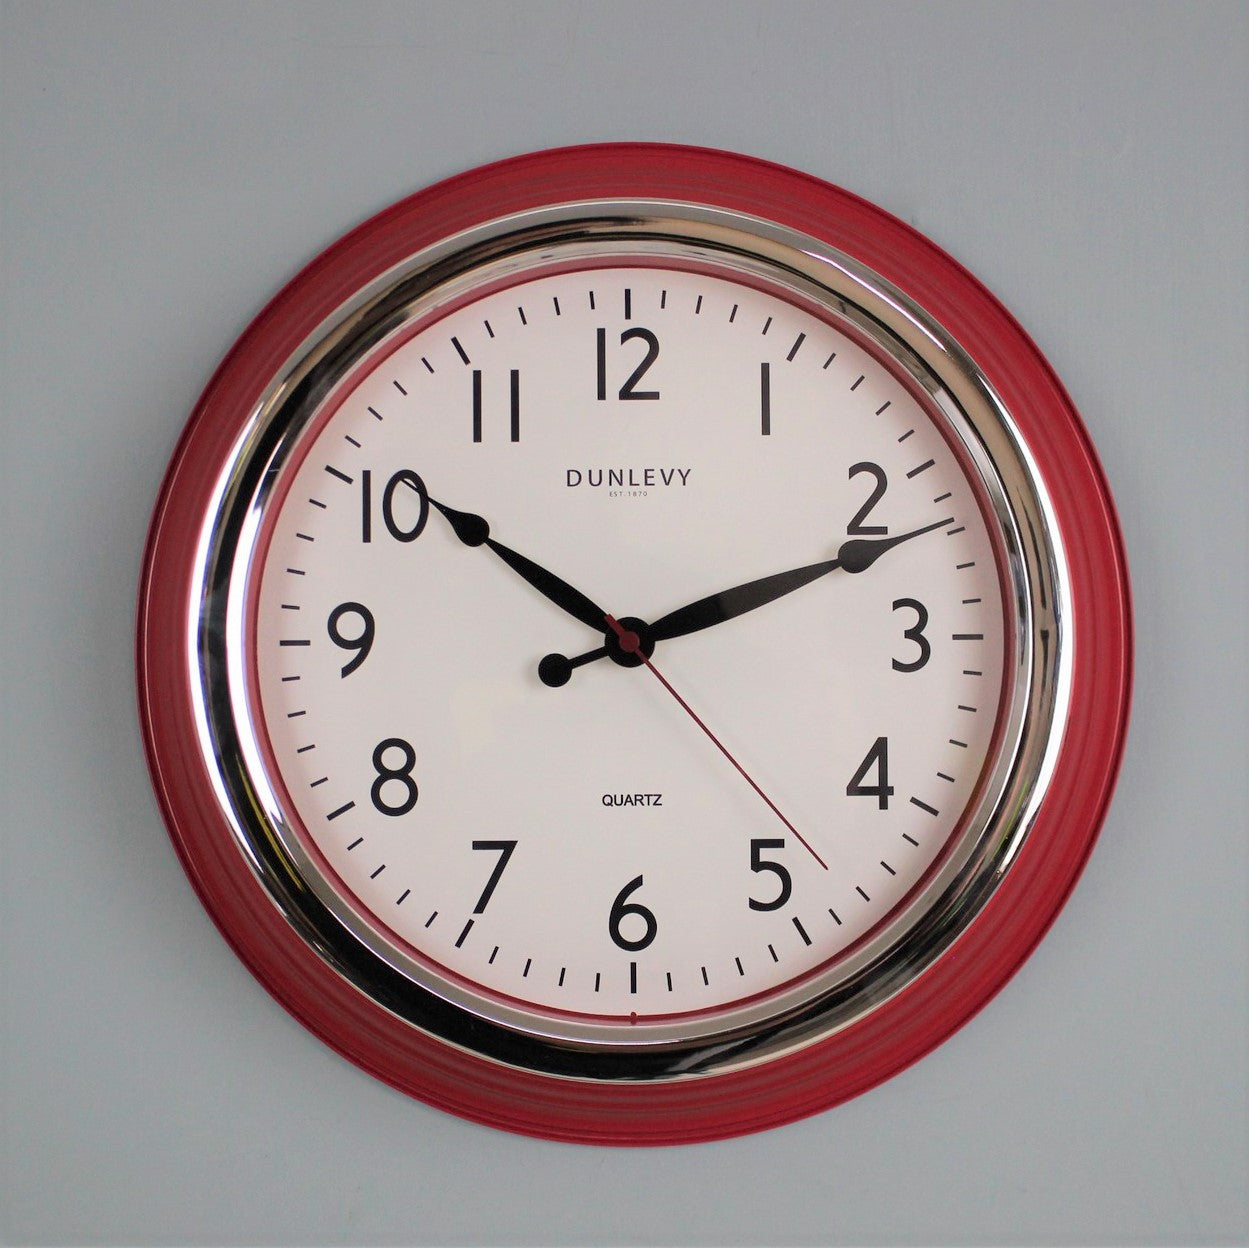 14 Inch Round Red Quartz Wall Analogue Indoor Clock